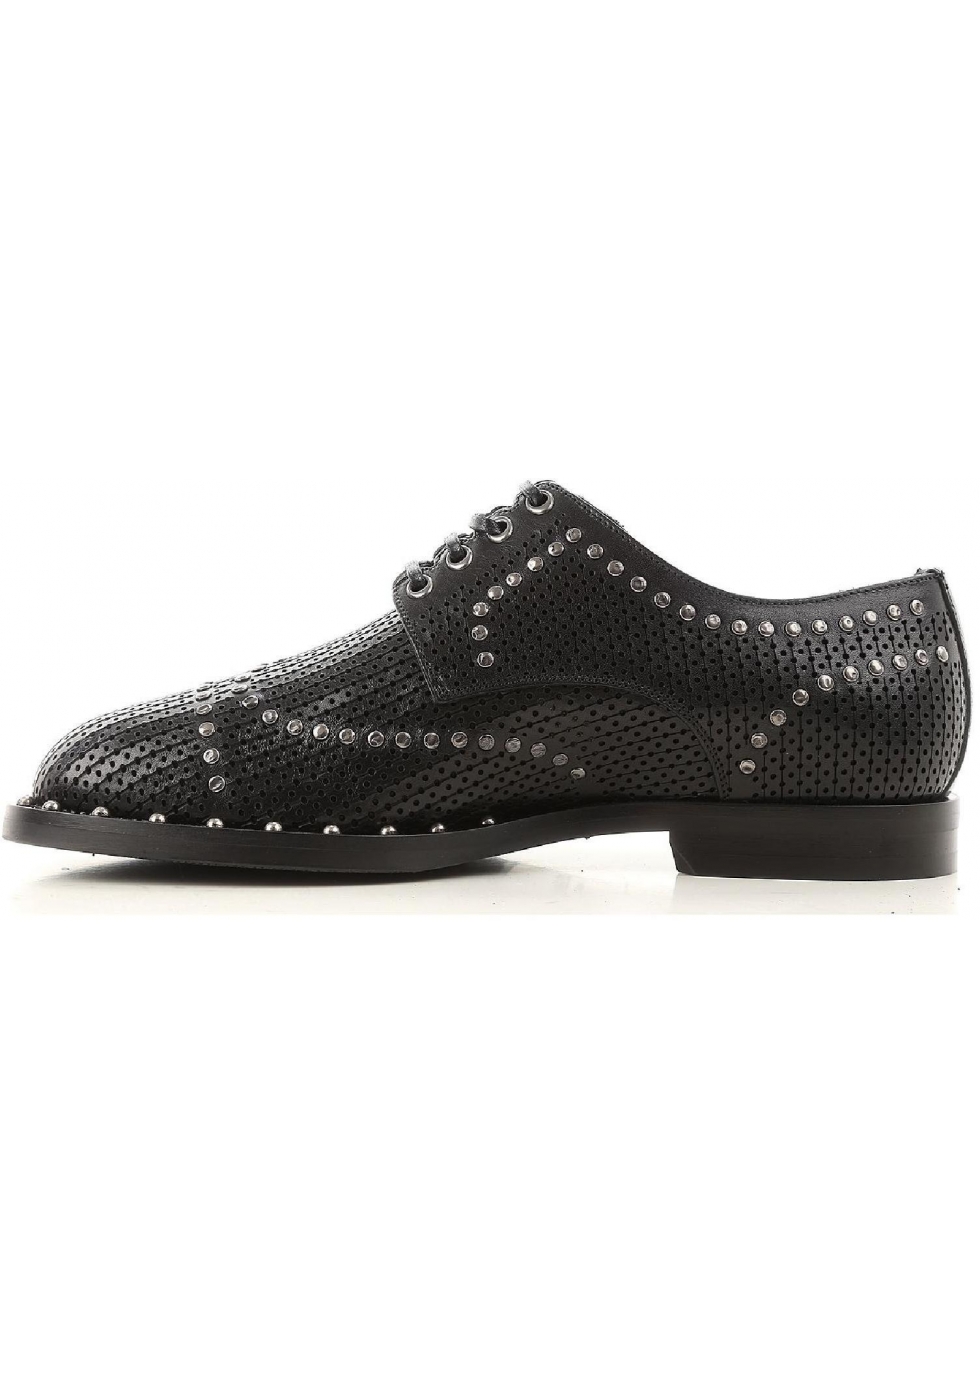 Dolce&Gabbana men's laser cut lace-up in black leather - Italian Boutique